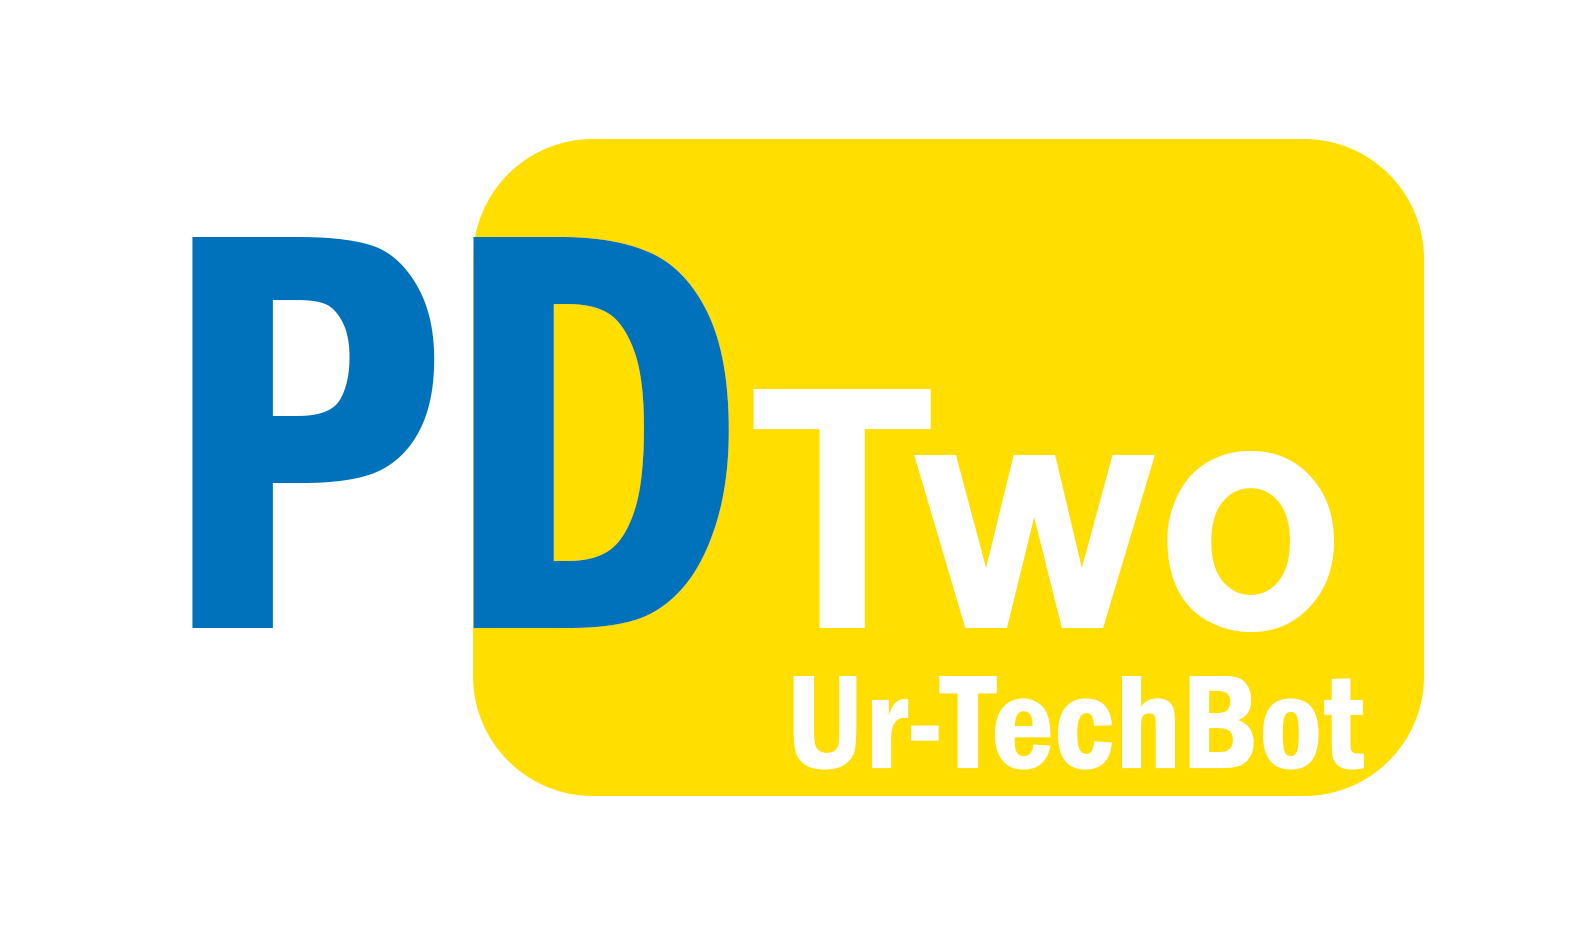 PDTwo - techbot